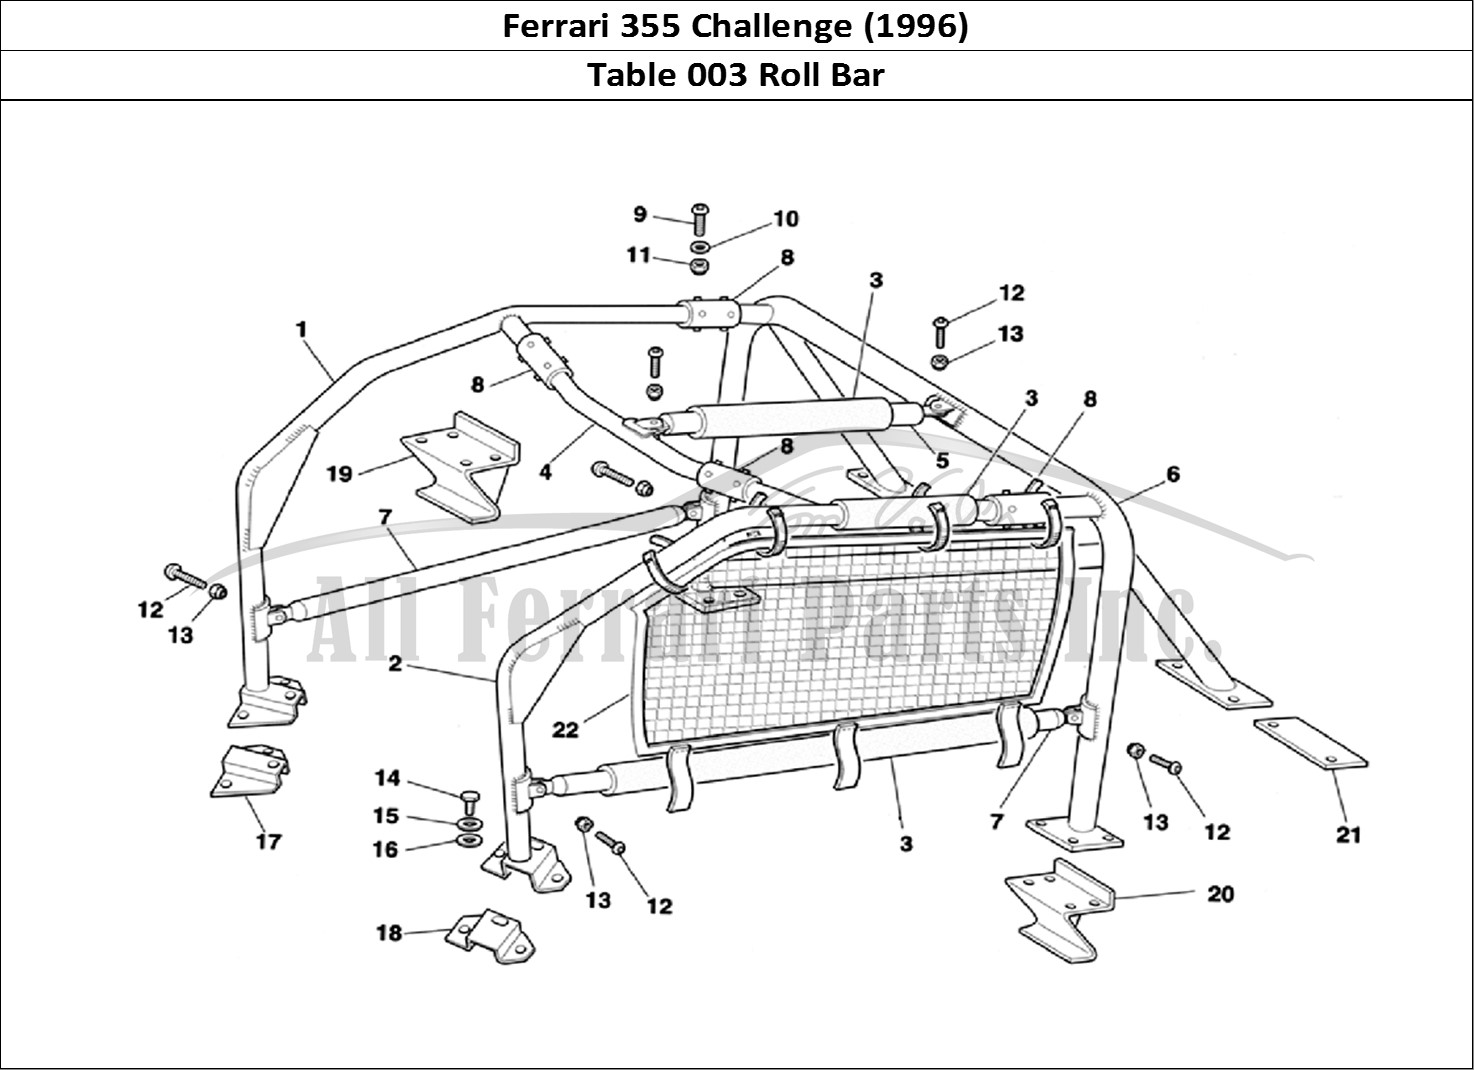 Ferrari Parts Ferrari 355 Challenge (1996) Page 003 Roll Bar